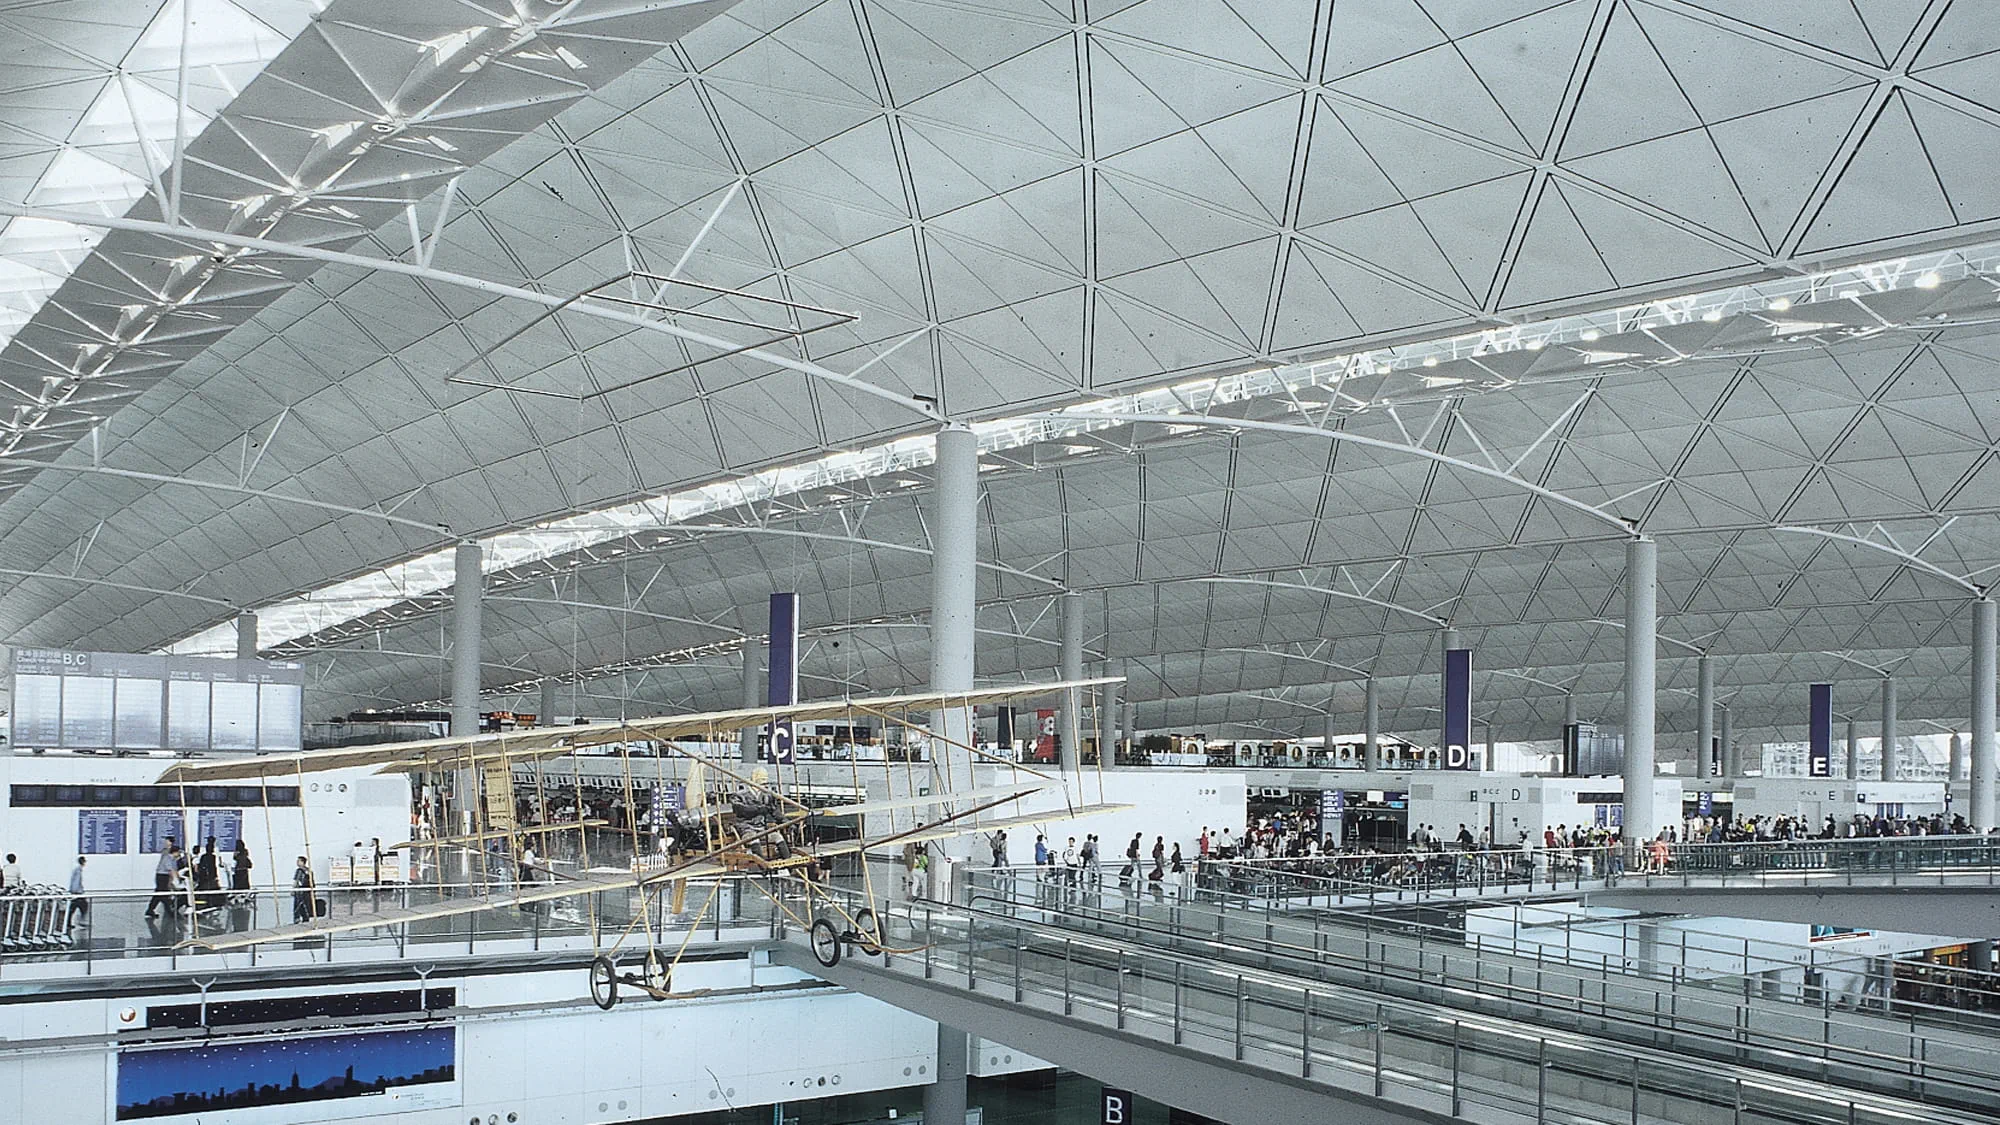 Interior view of the airport. Credit: 电竞竞猜外围 